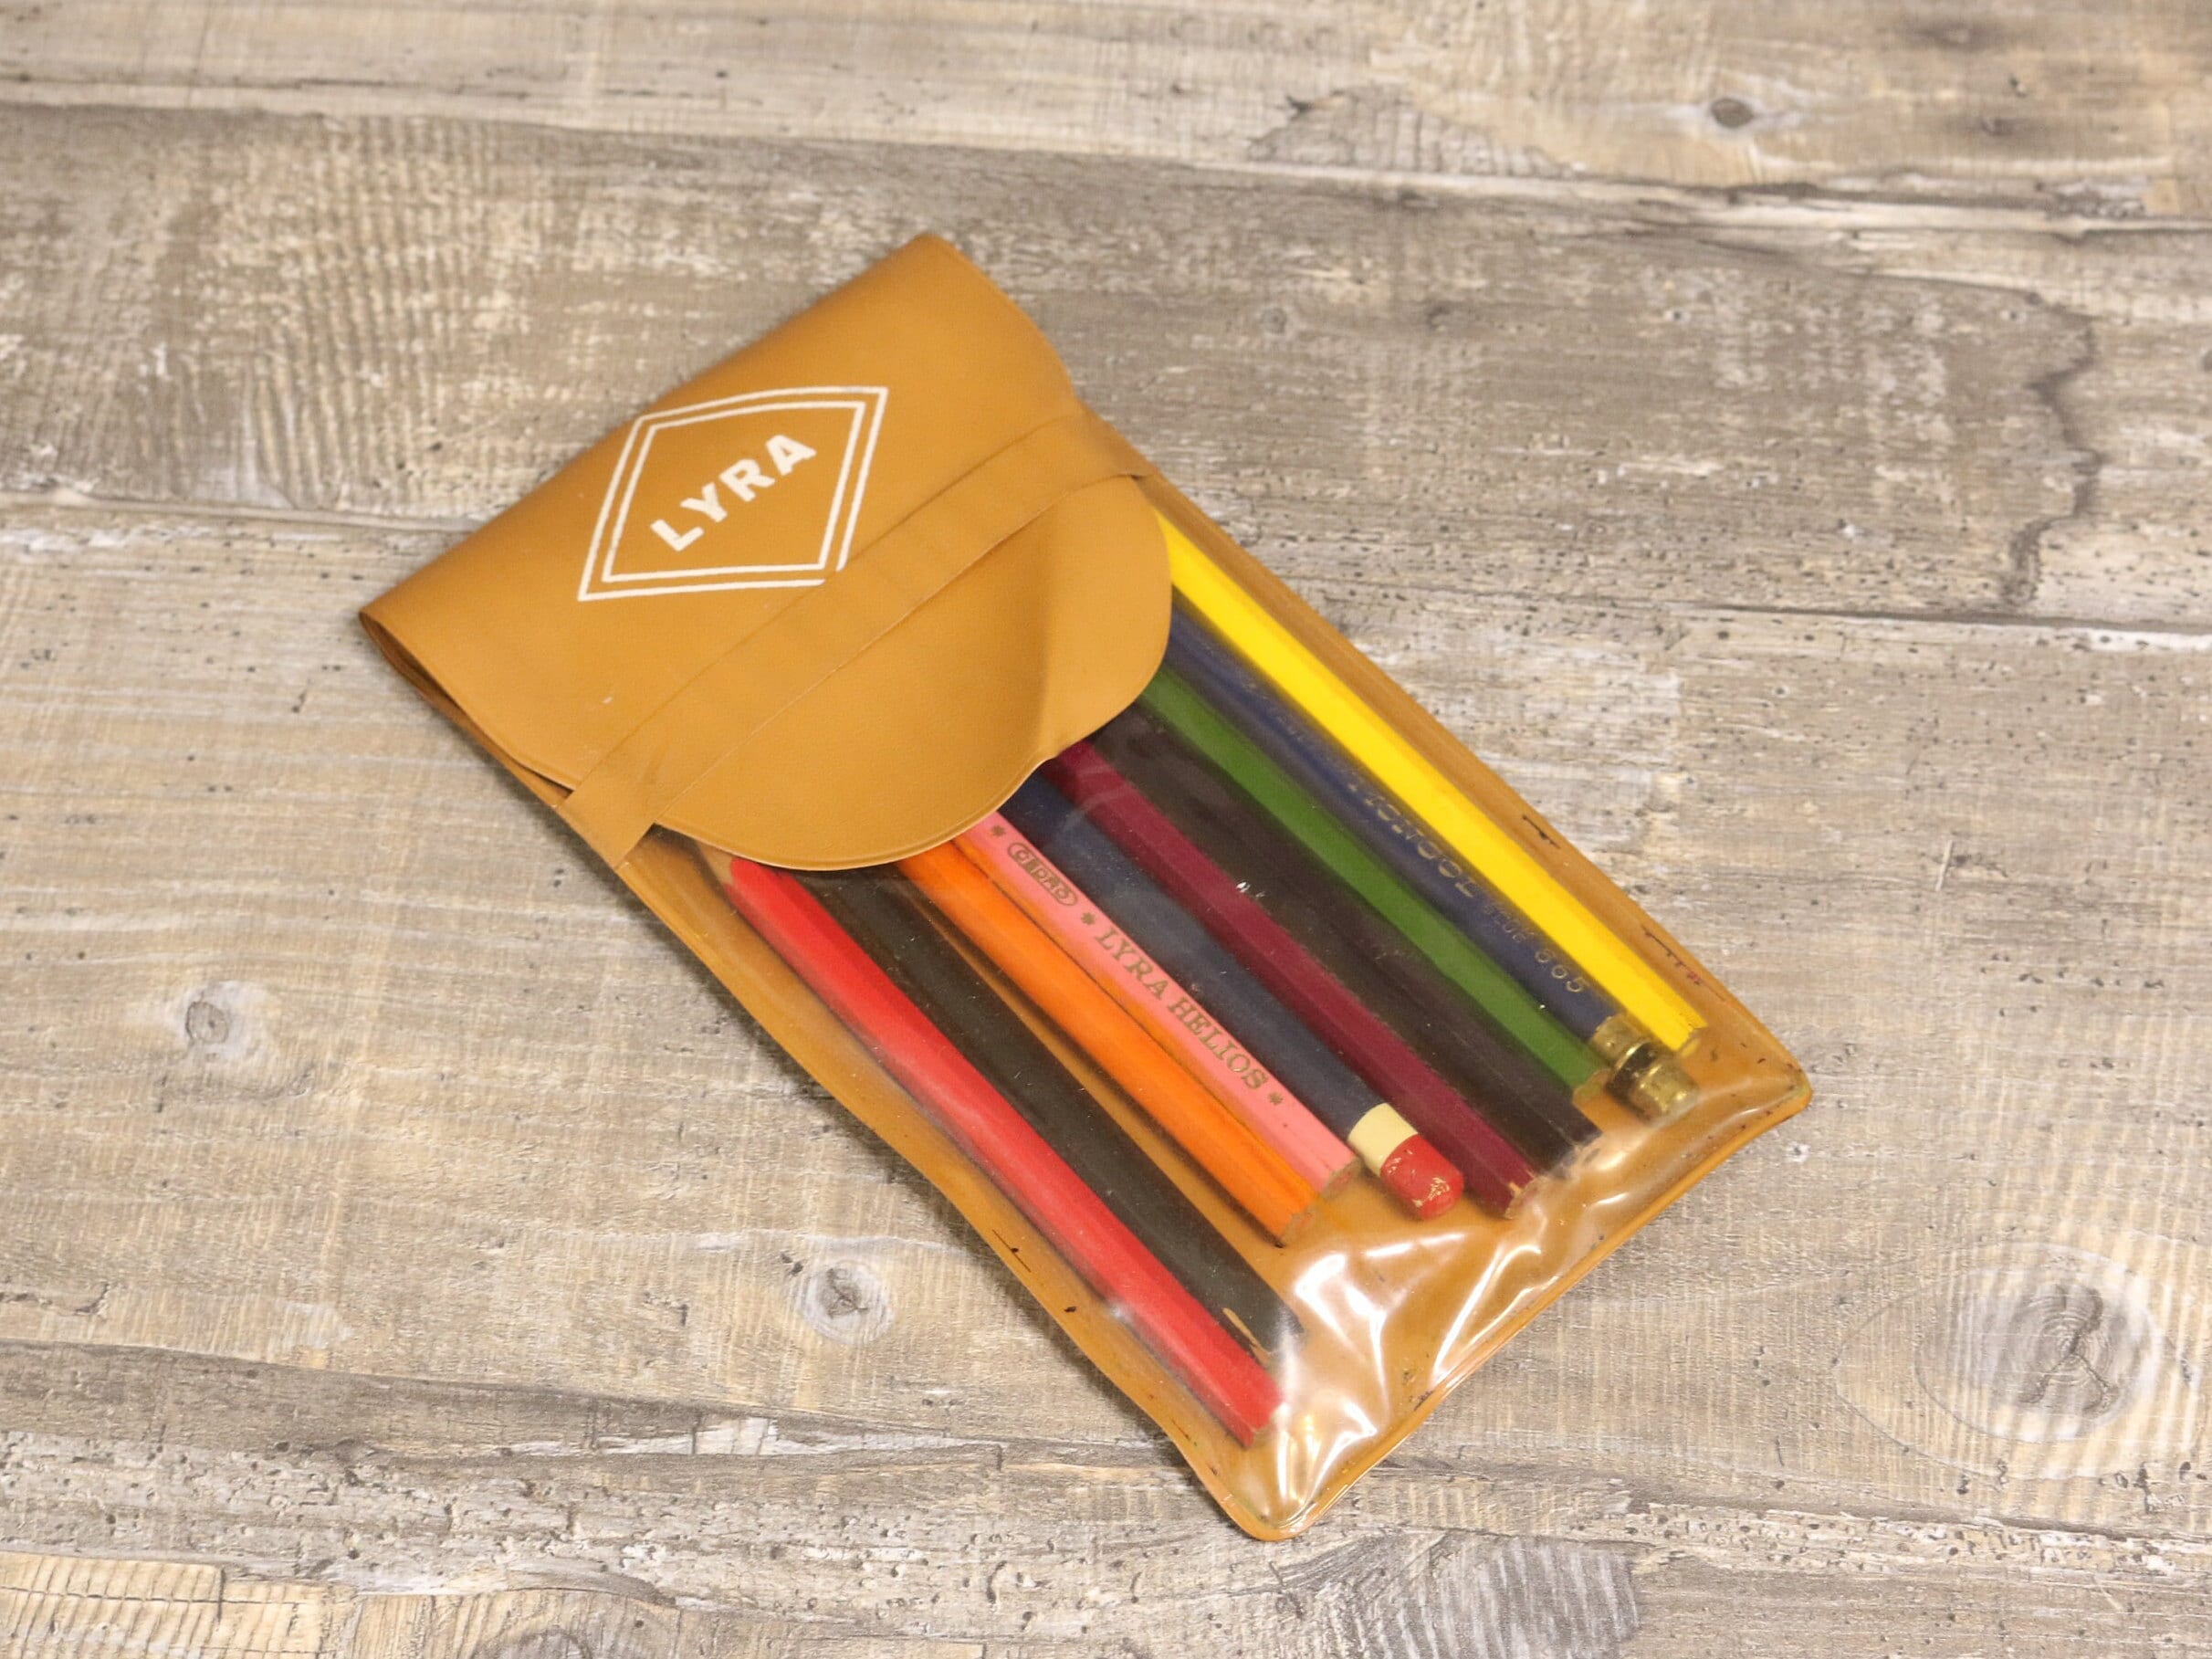 Dry Highlighter Wooden Colour Lyra Pencils 